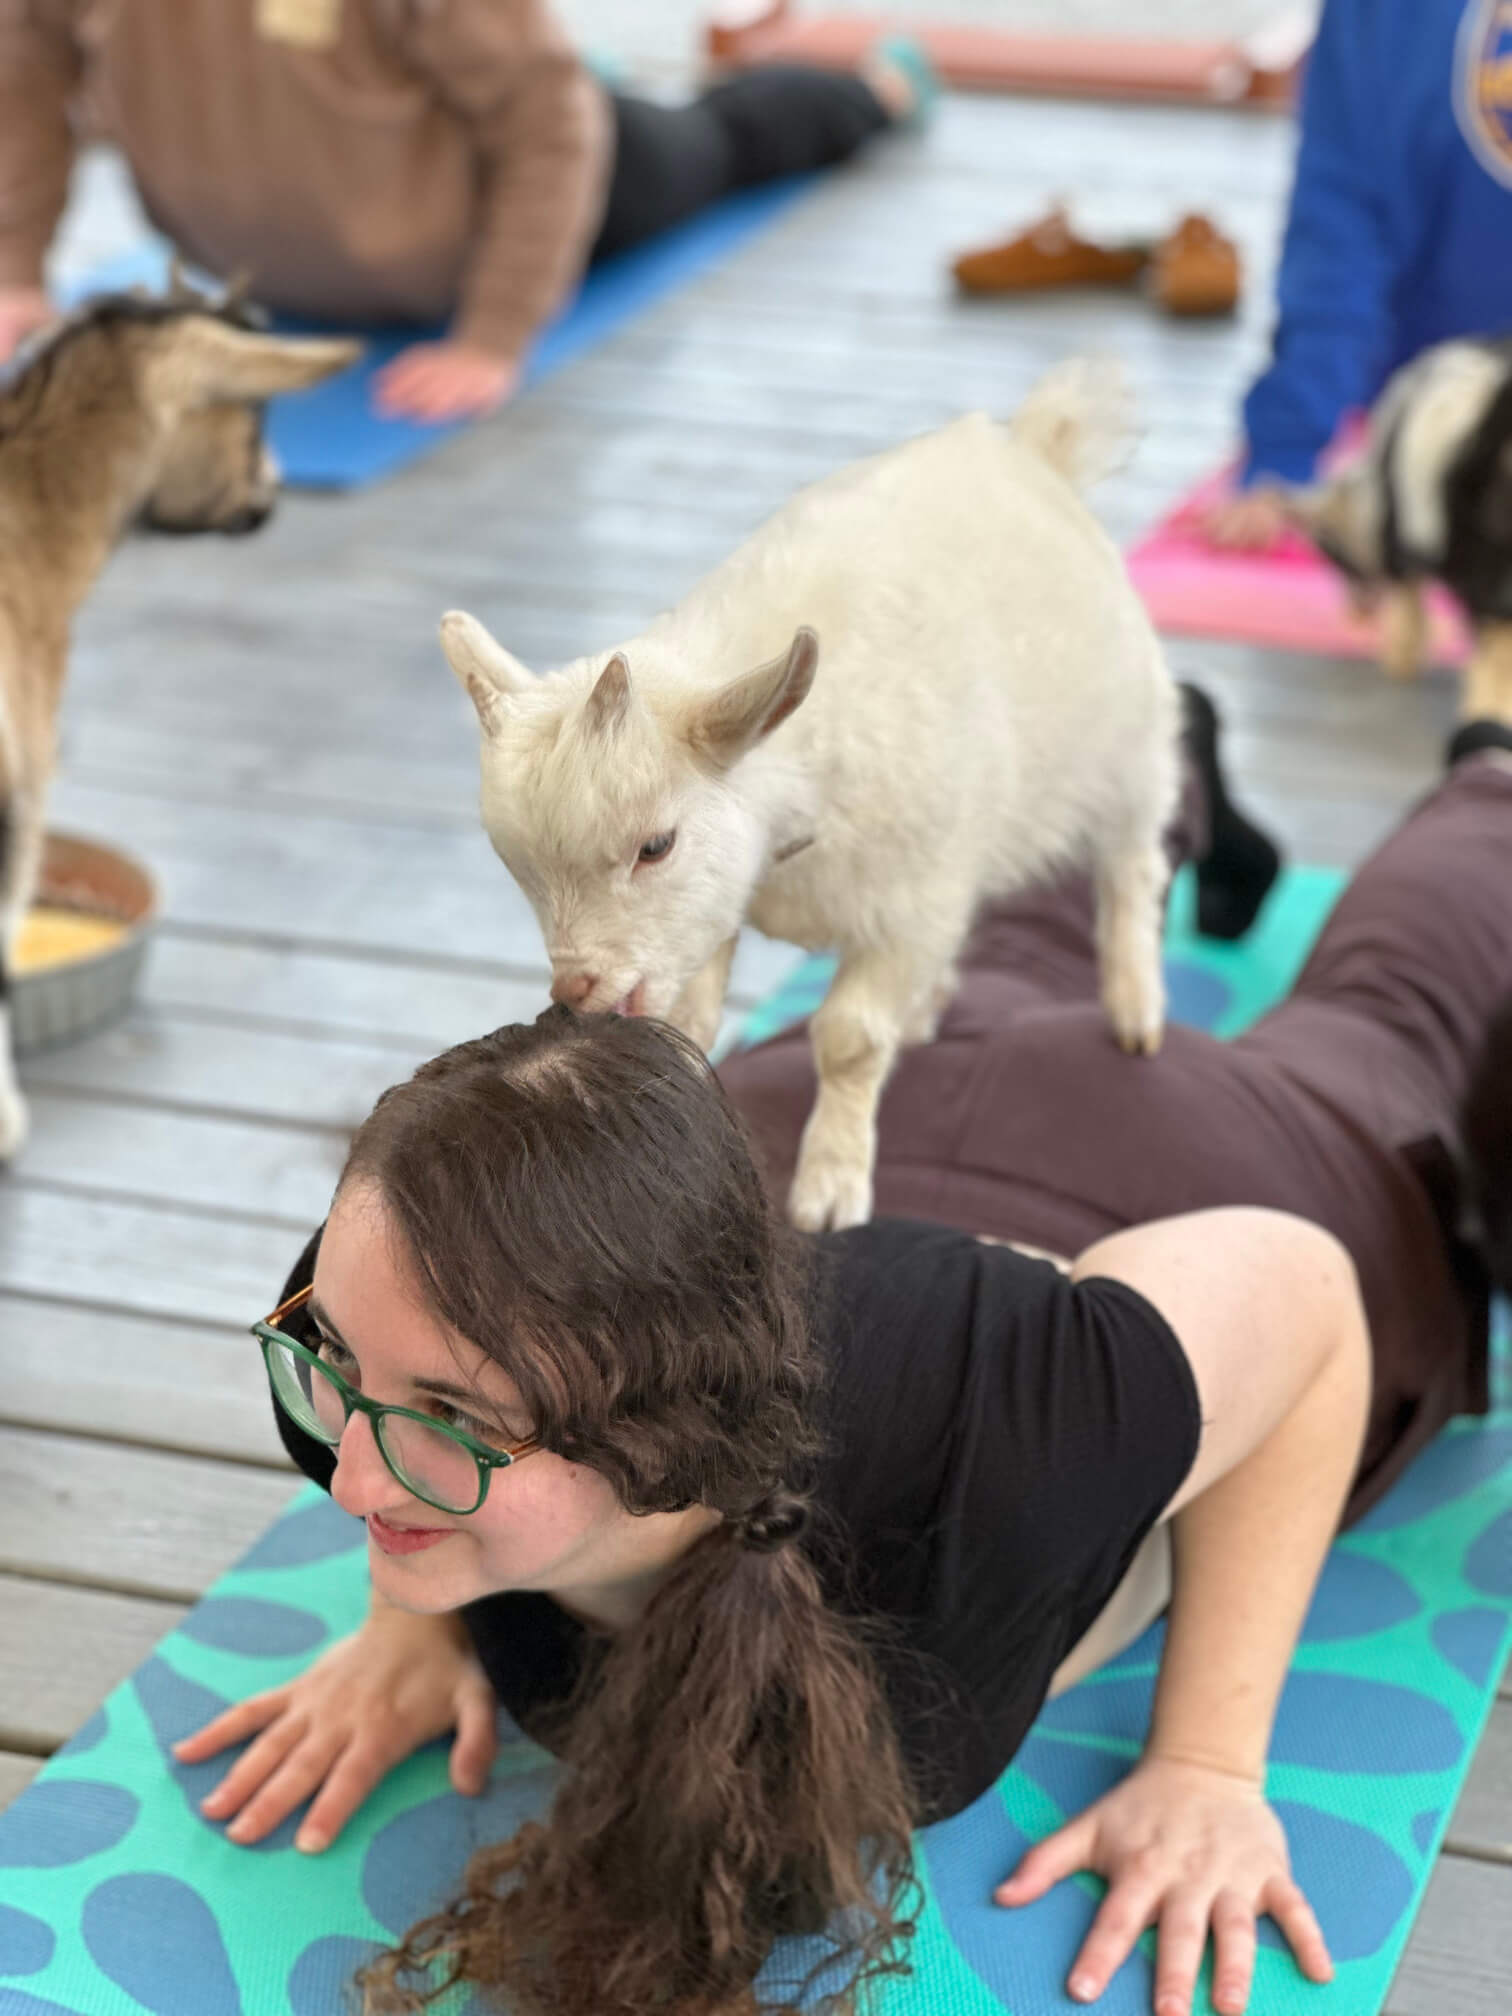 goat yoga gallery image